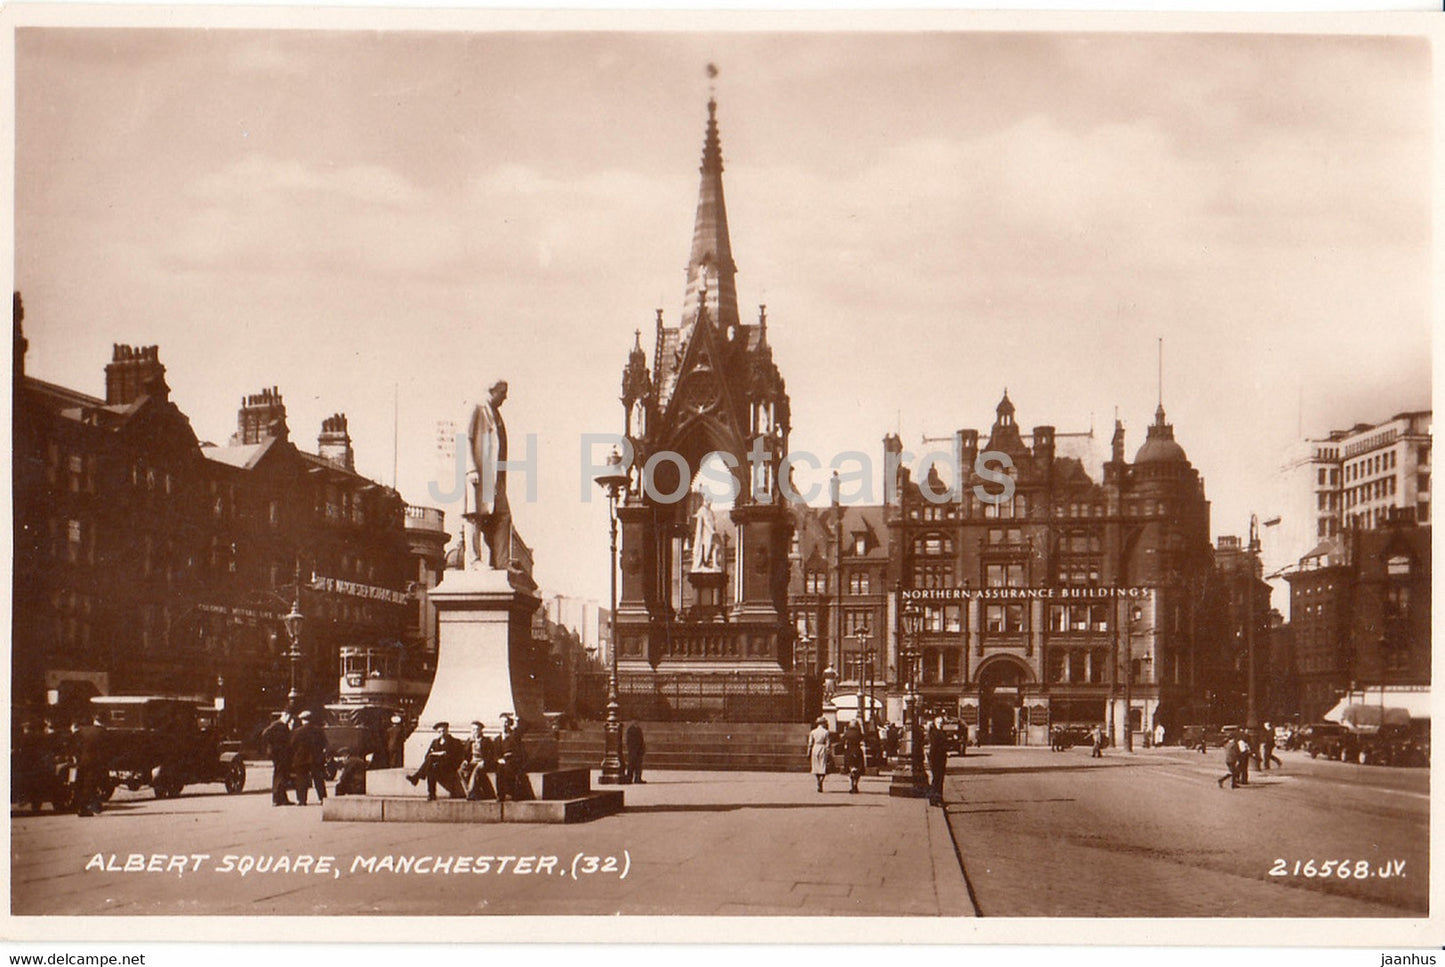 Manchester - Albert Square - 32 - old postcard - England - United Kingdom - unused - JH Postcards